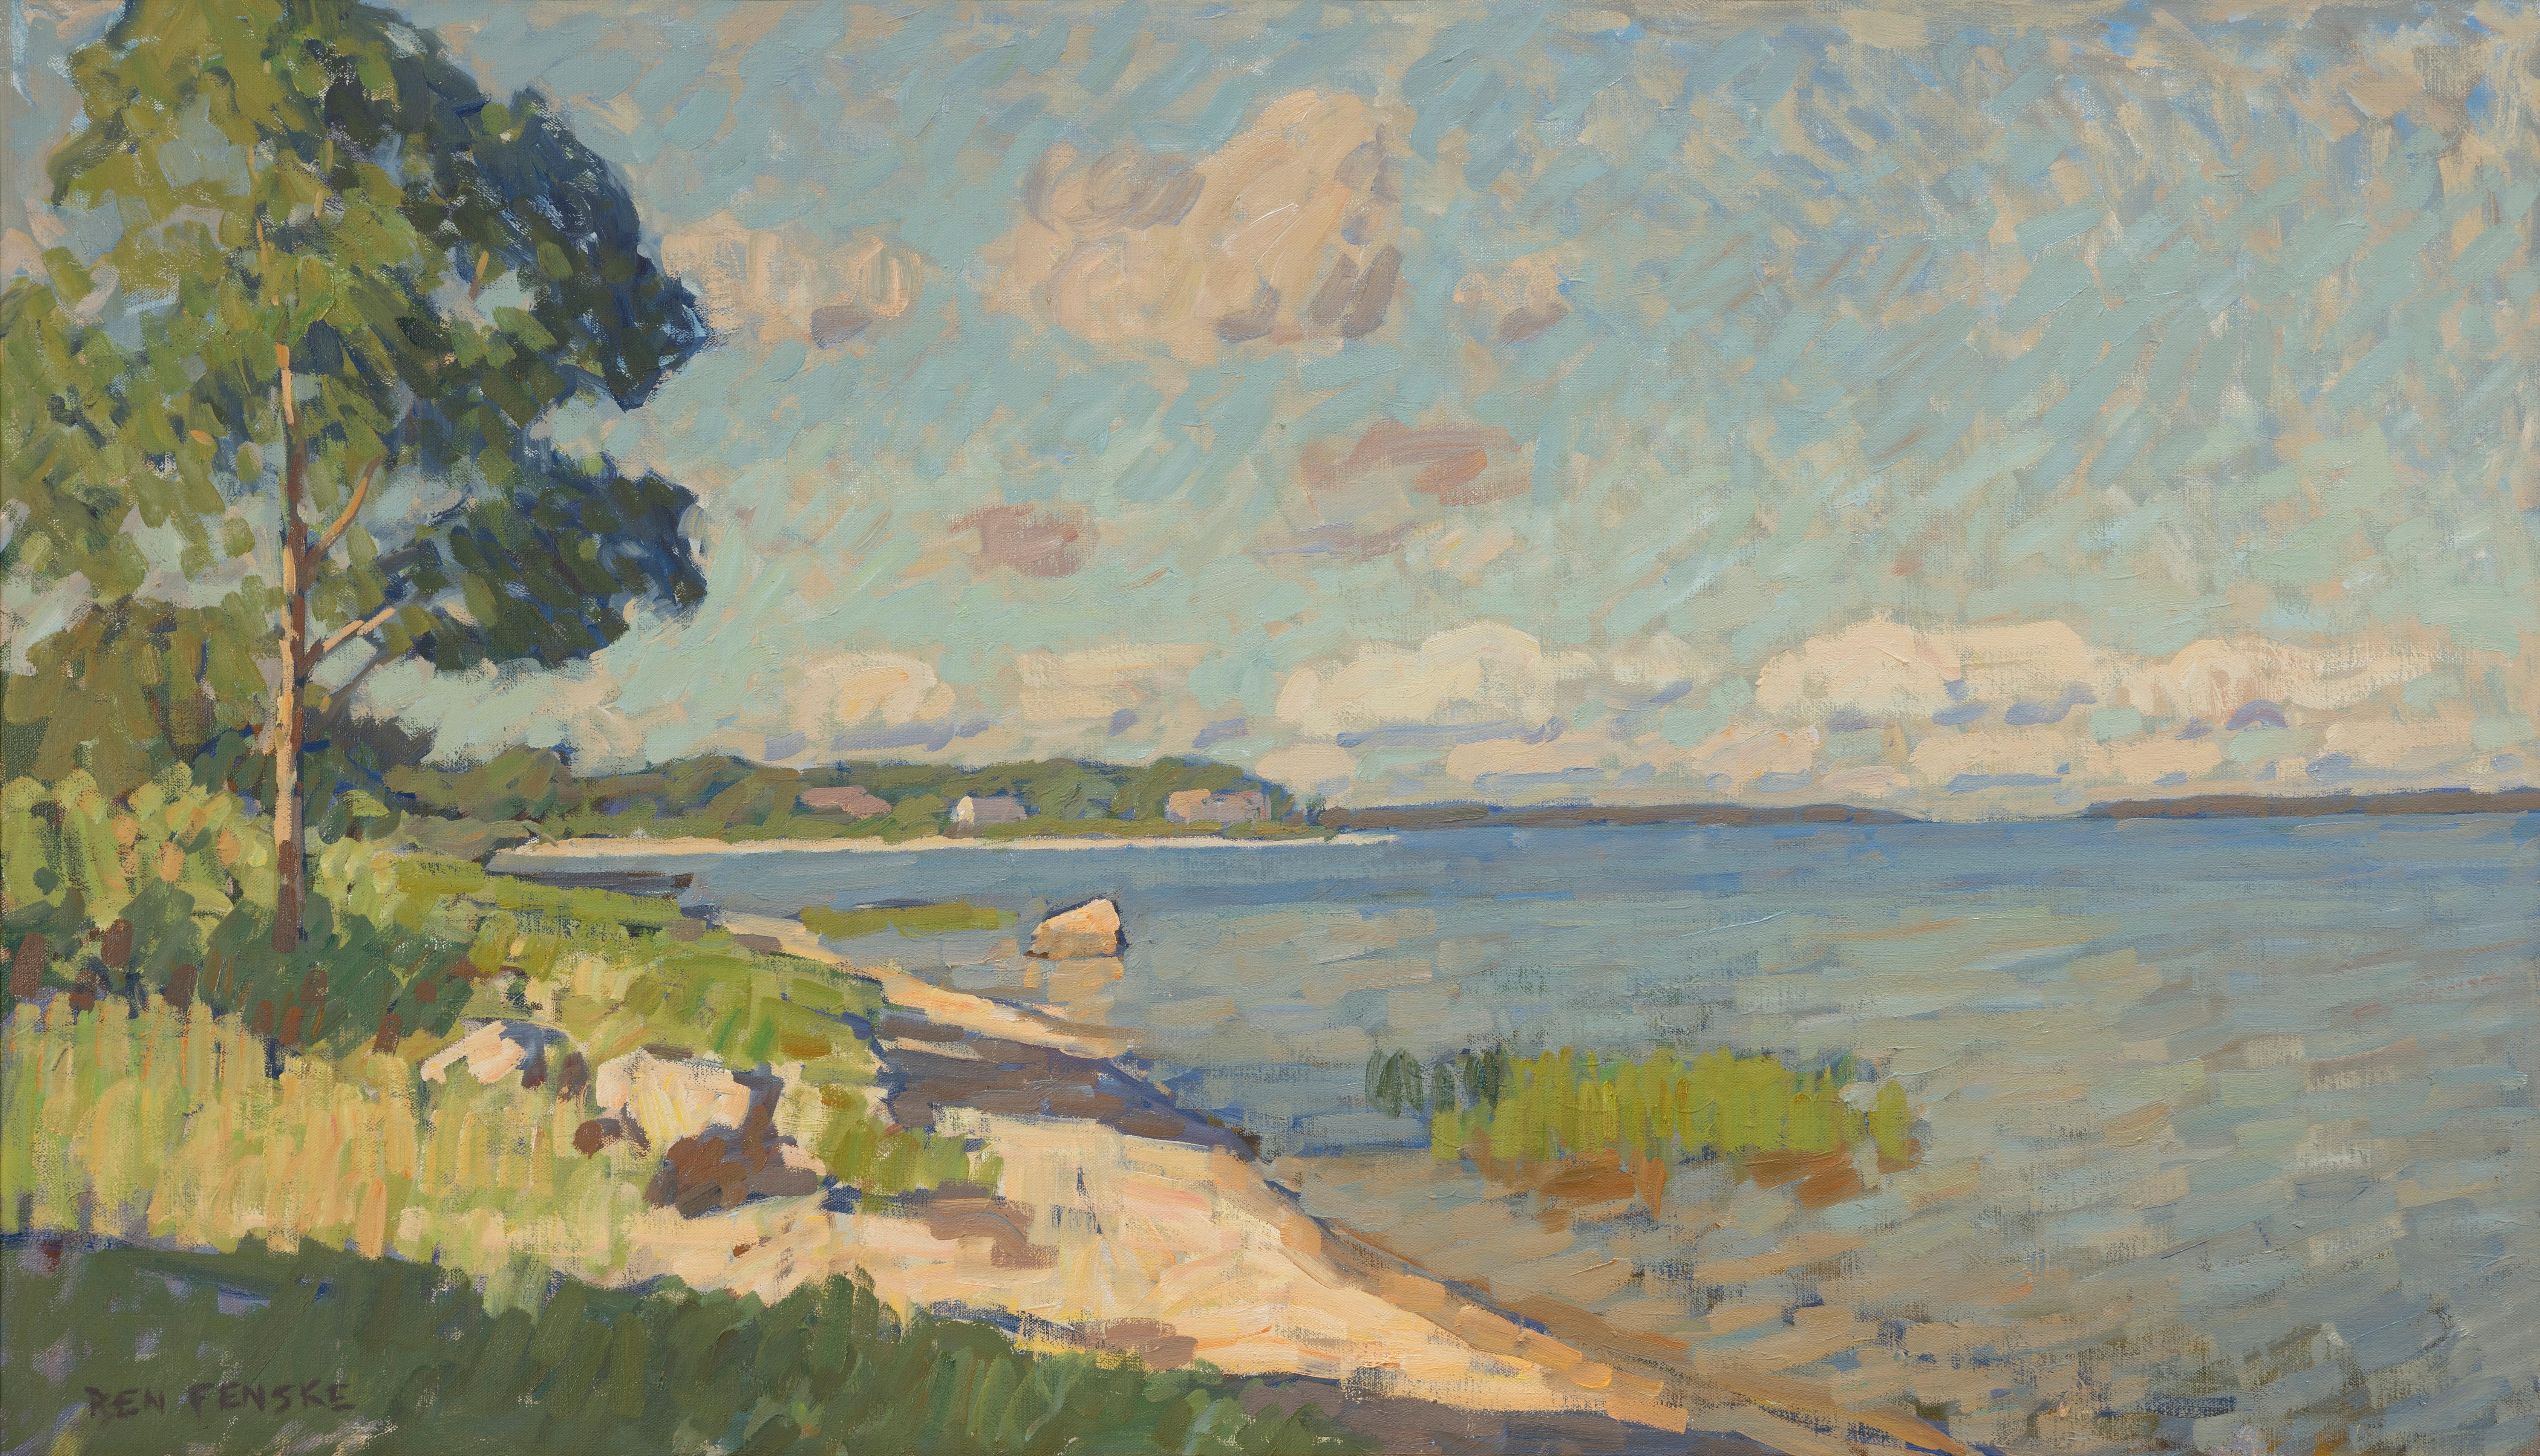 Ben Fenske Landscape Painting - "Secret Beach, Shadows" 2023 impressionist plein air landscape in Long Island NY